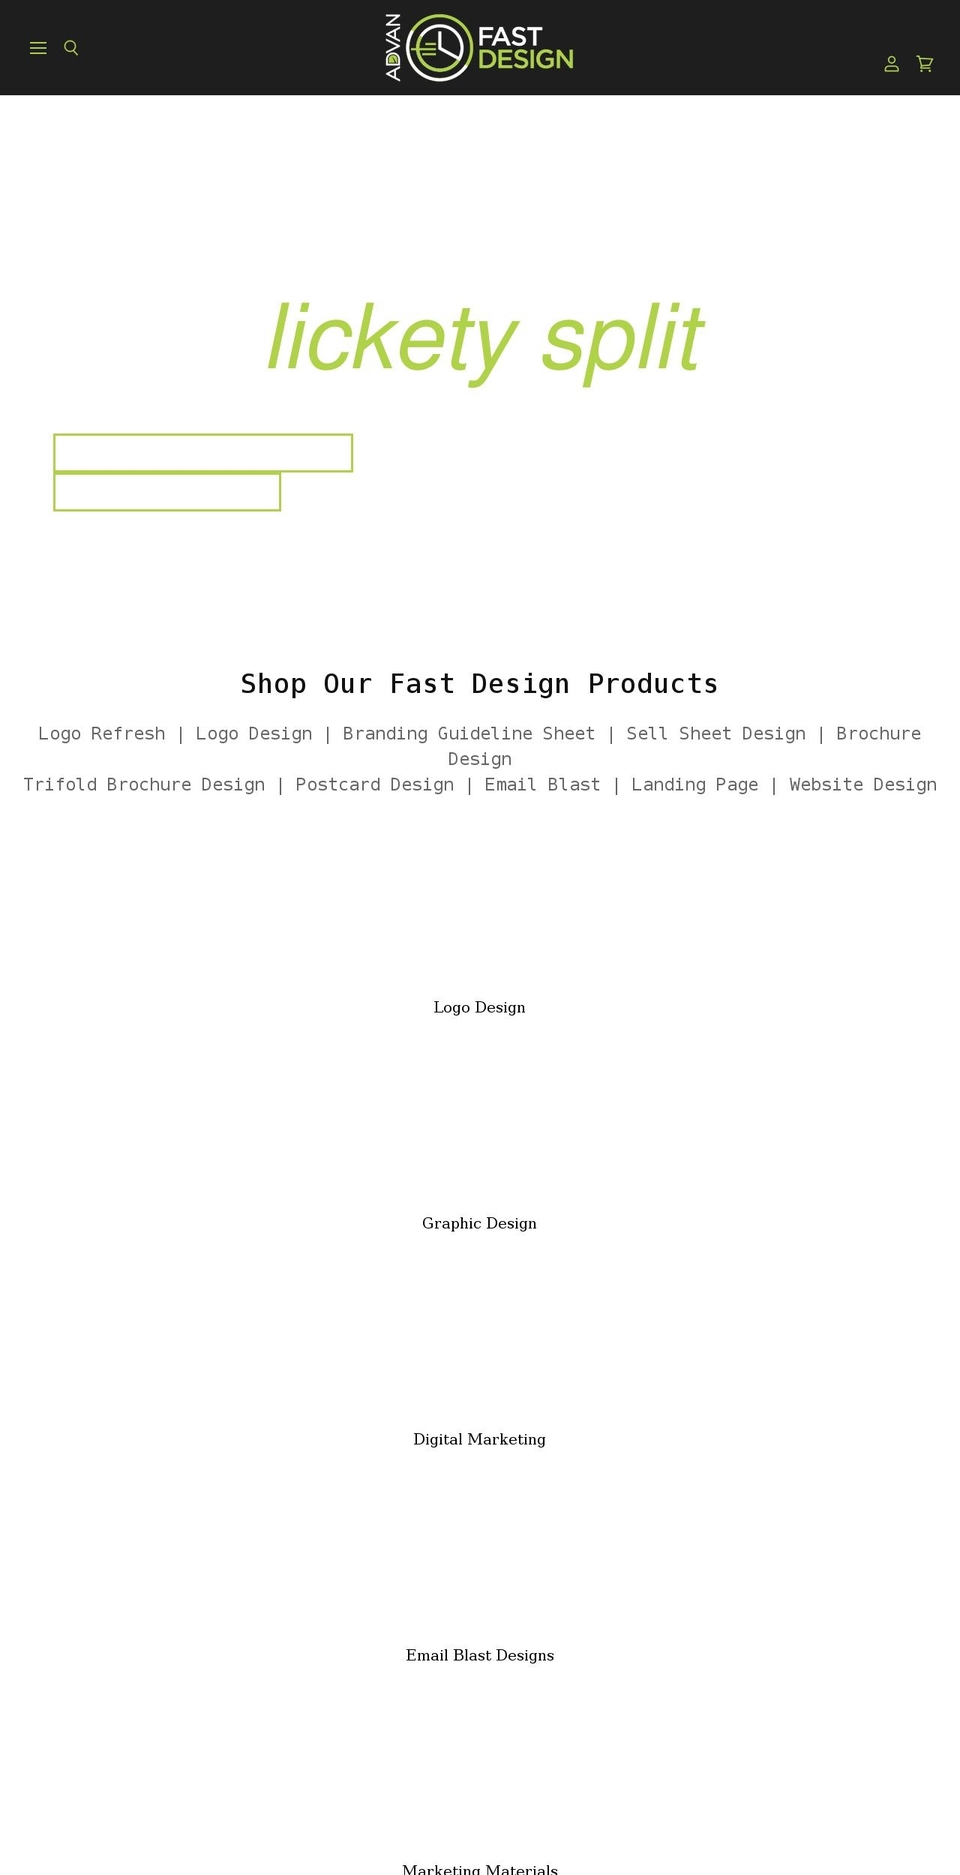 Superstore-v Shopify theme site example fastdesign.biz